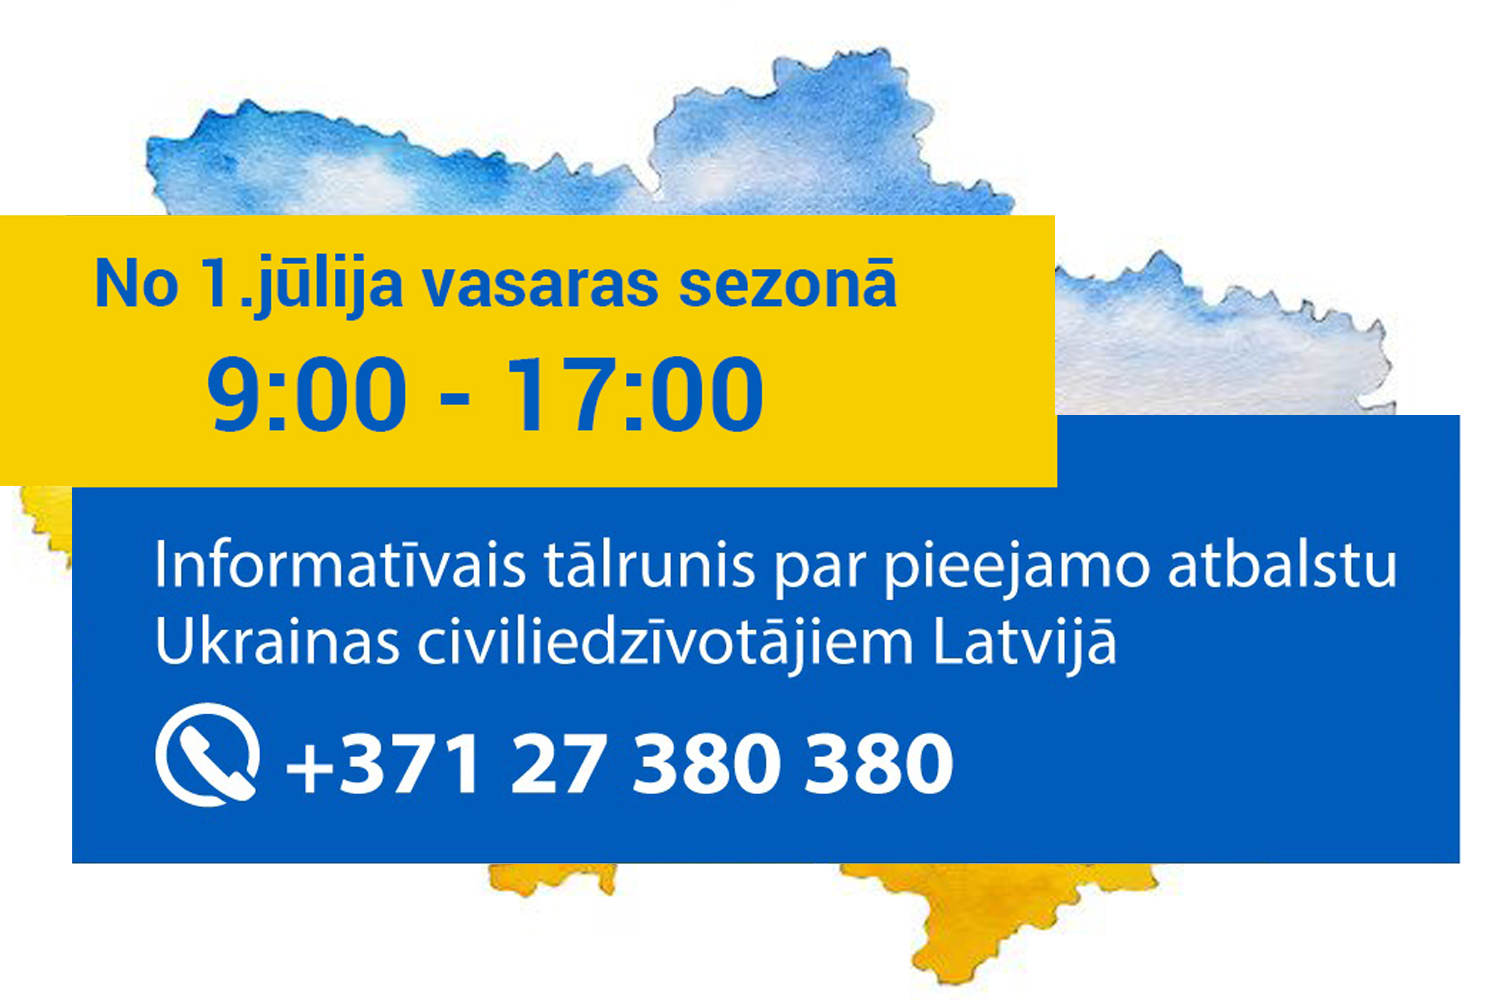 Ukraine information hotline under the management of the One Stop Shop